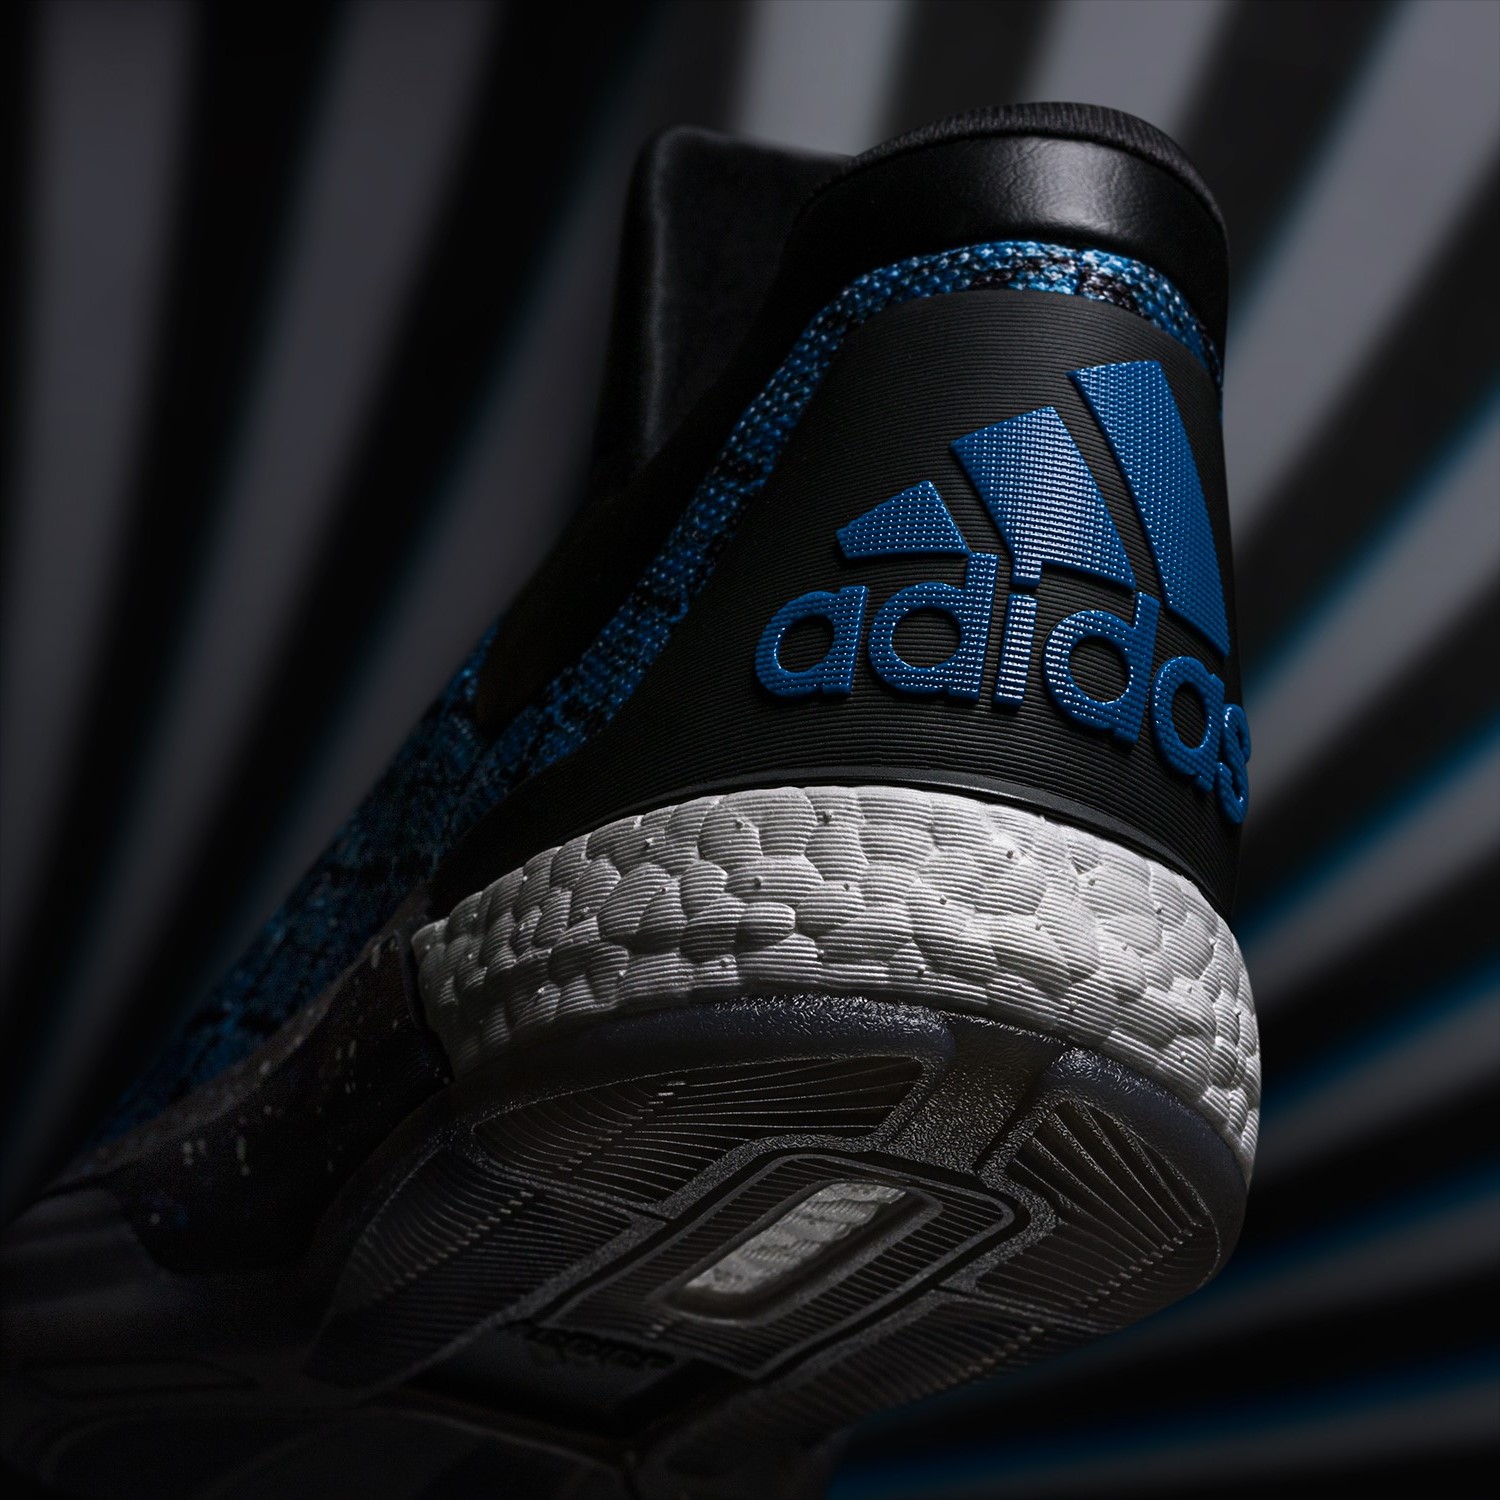 adidas-Crazylight-Boost-2015-official-05.jpg